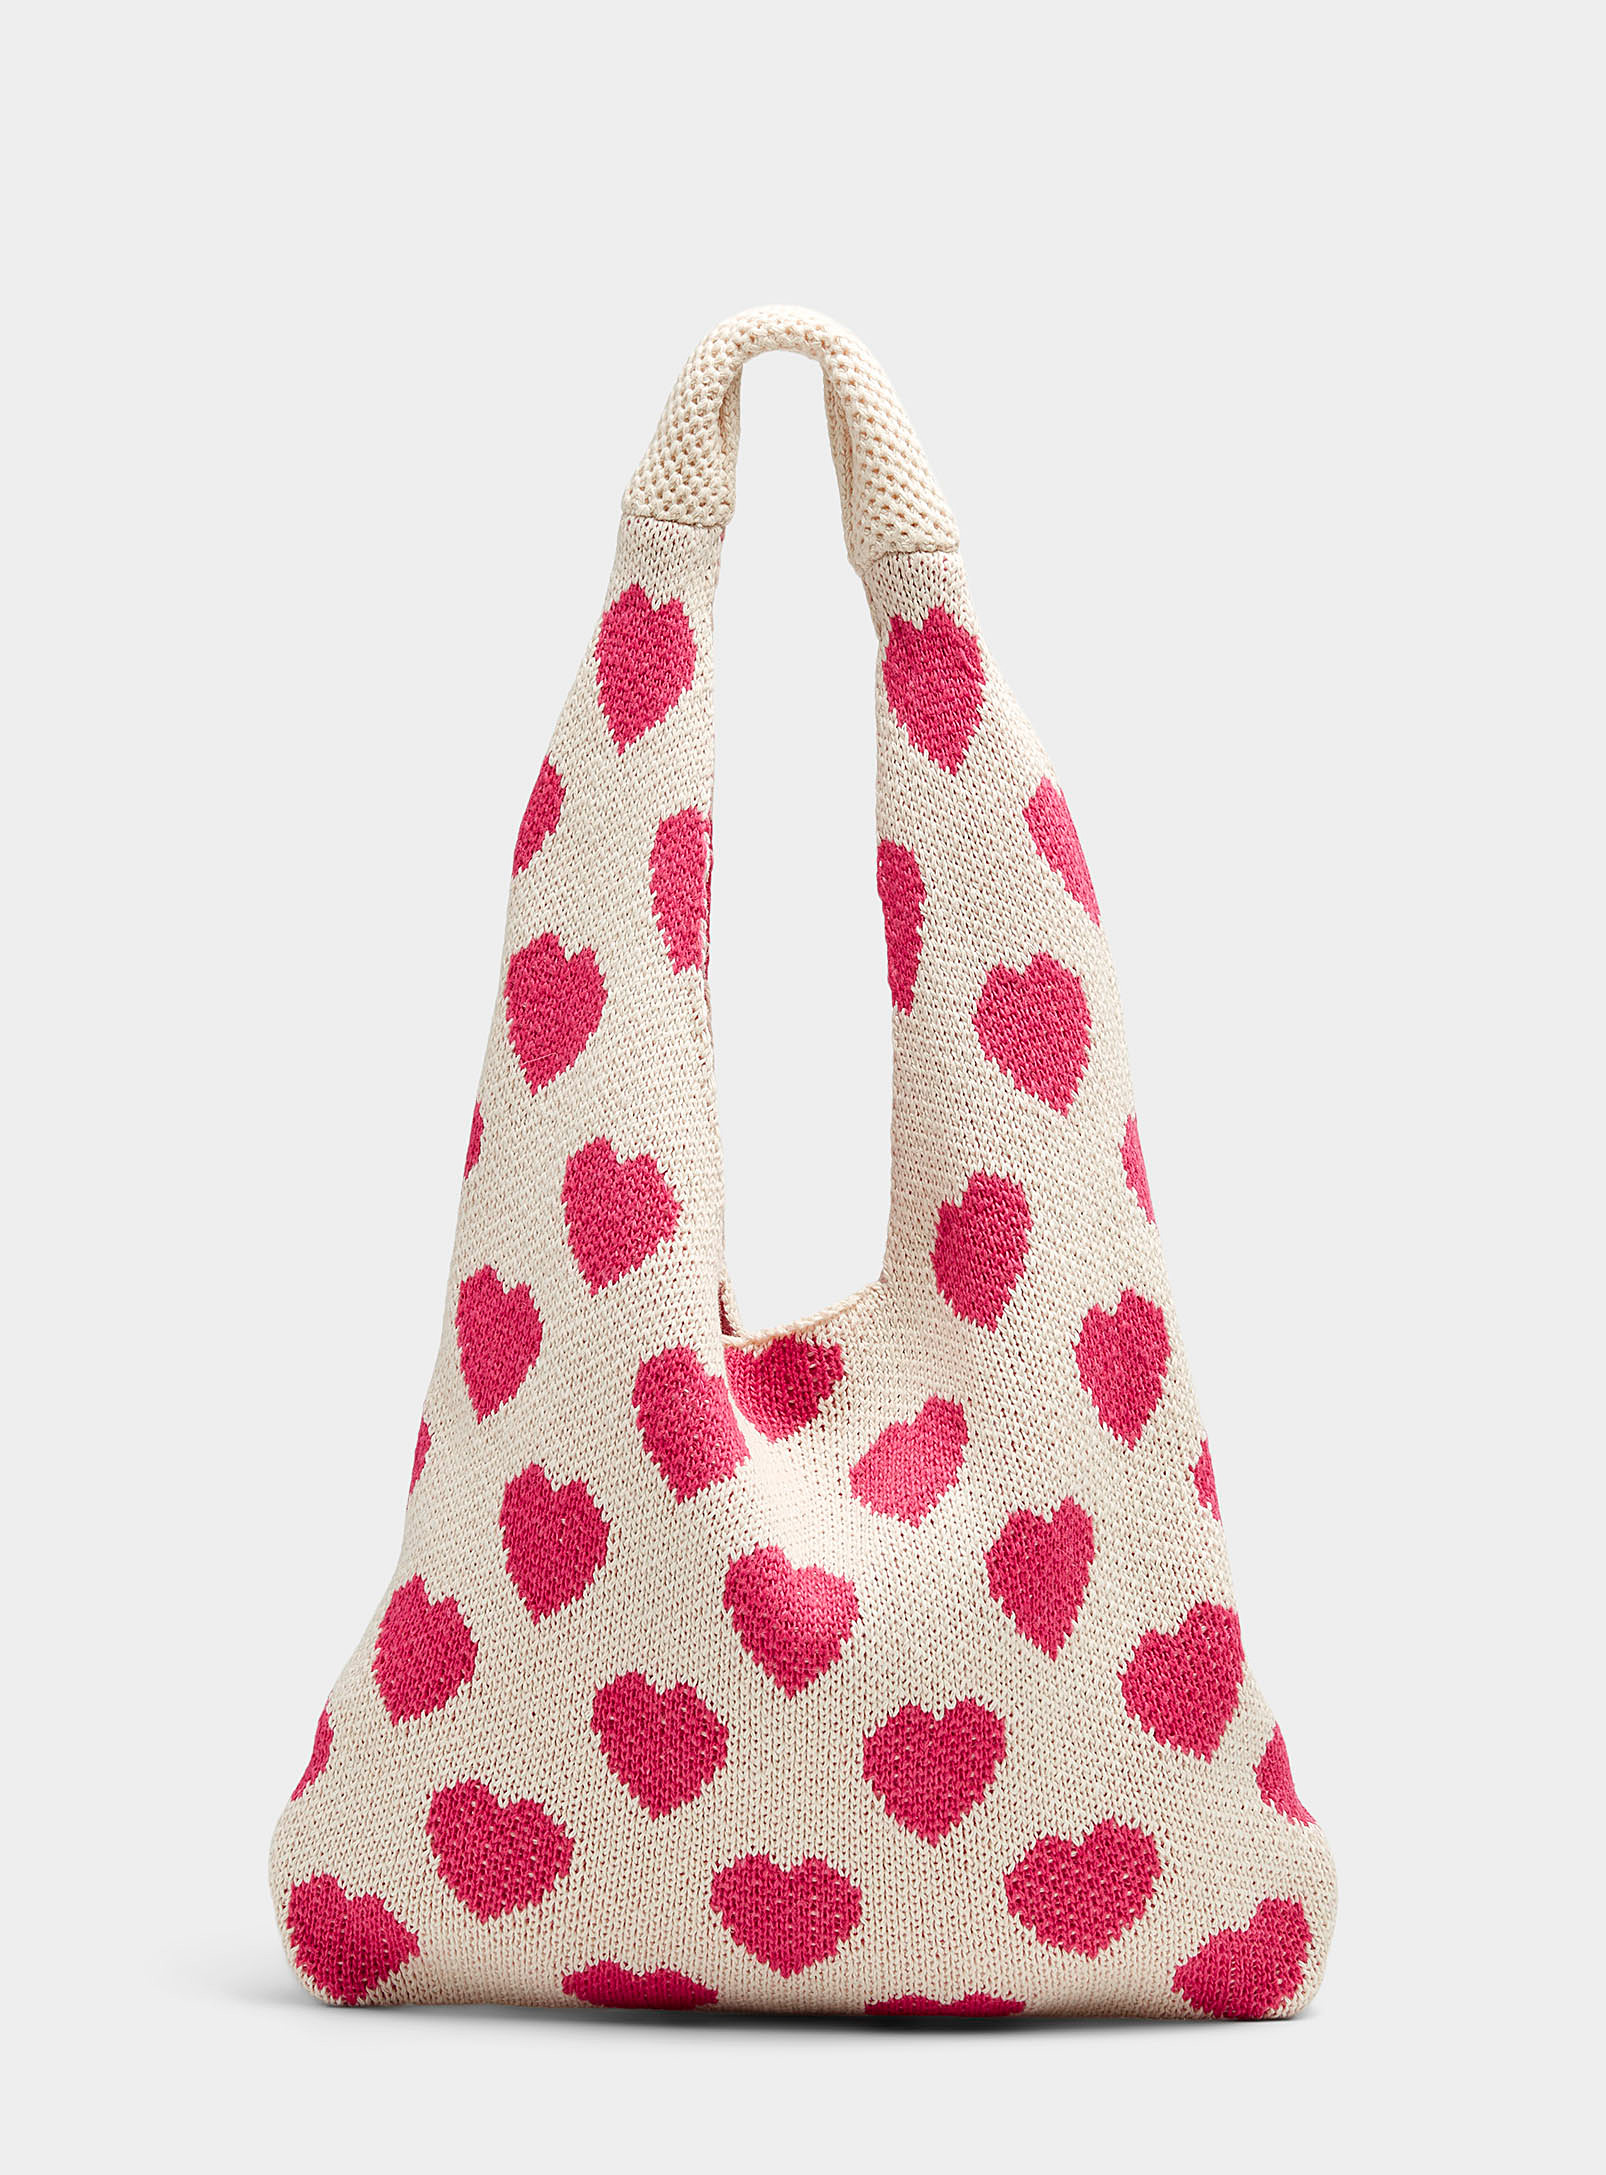 Simons - Women's Pink heart knit Tote Bag